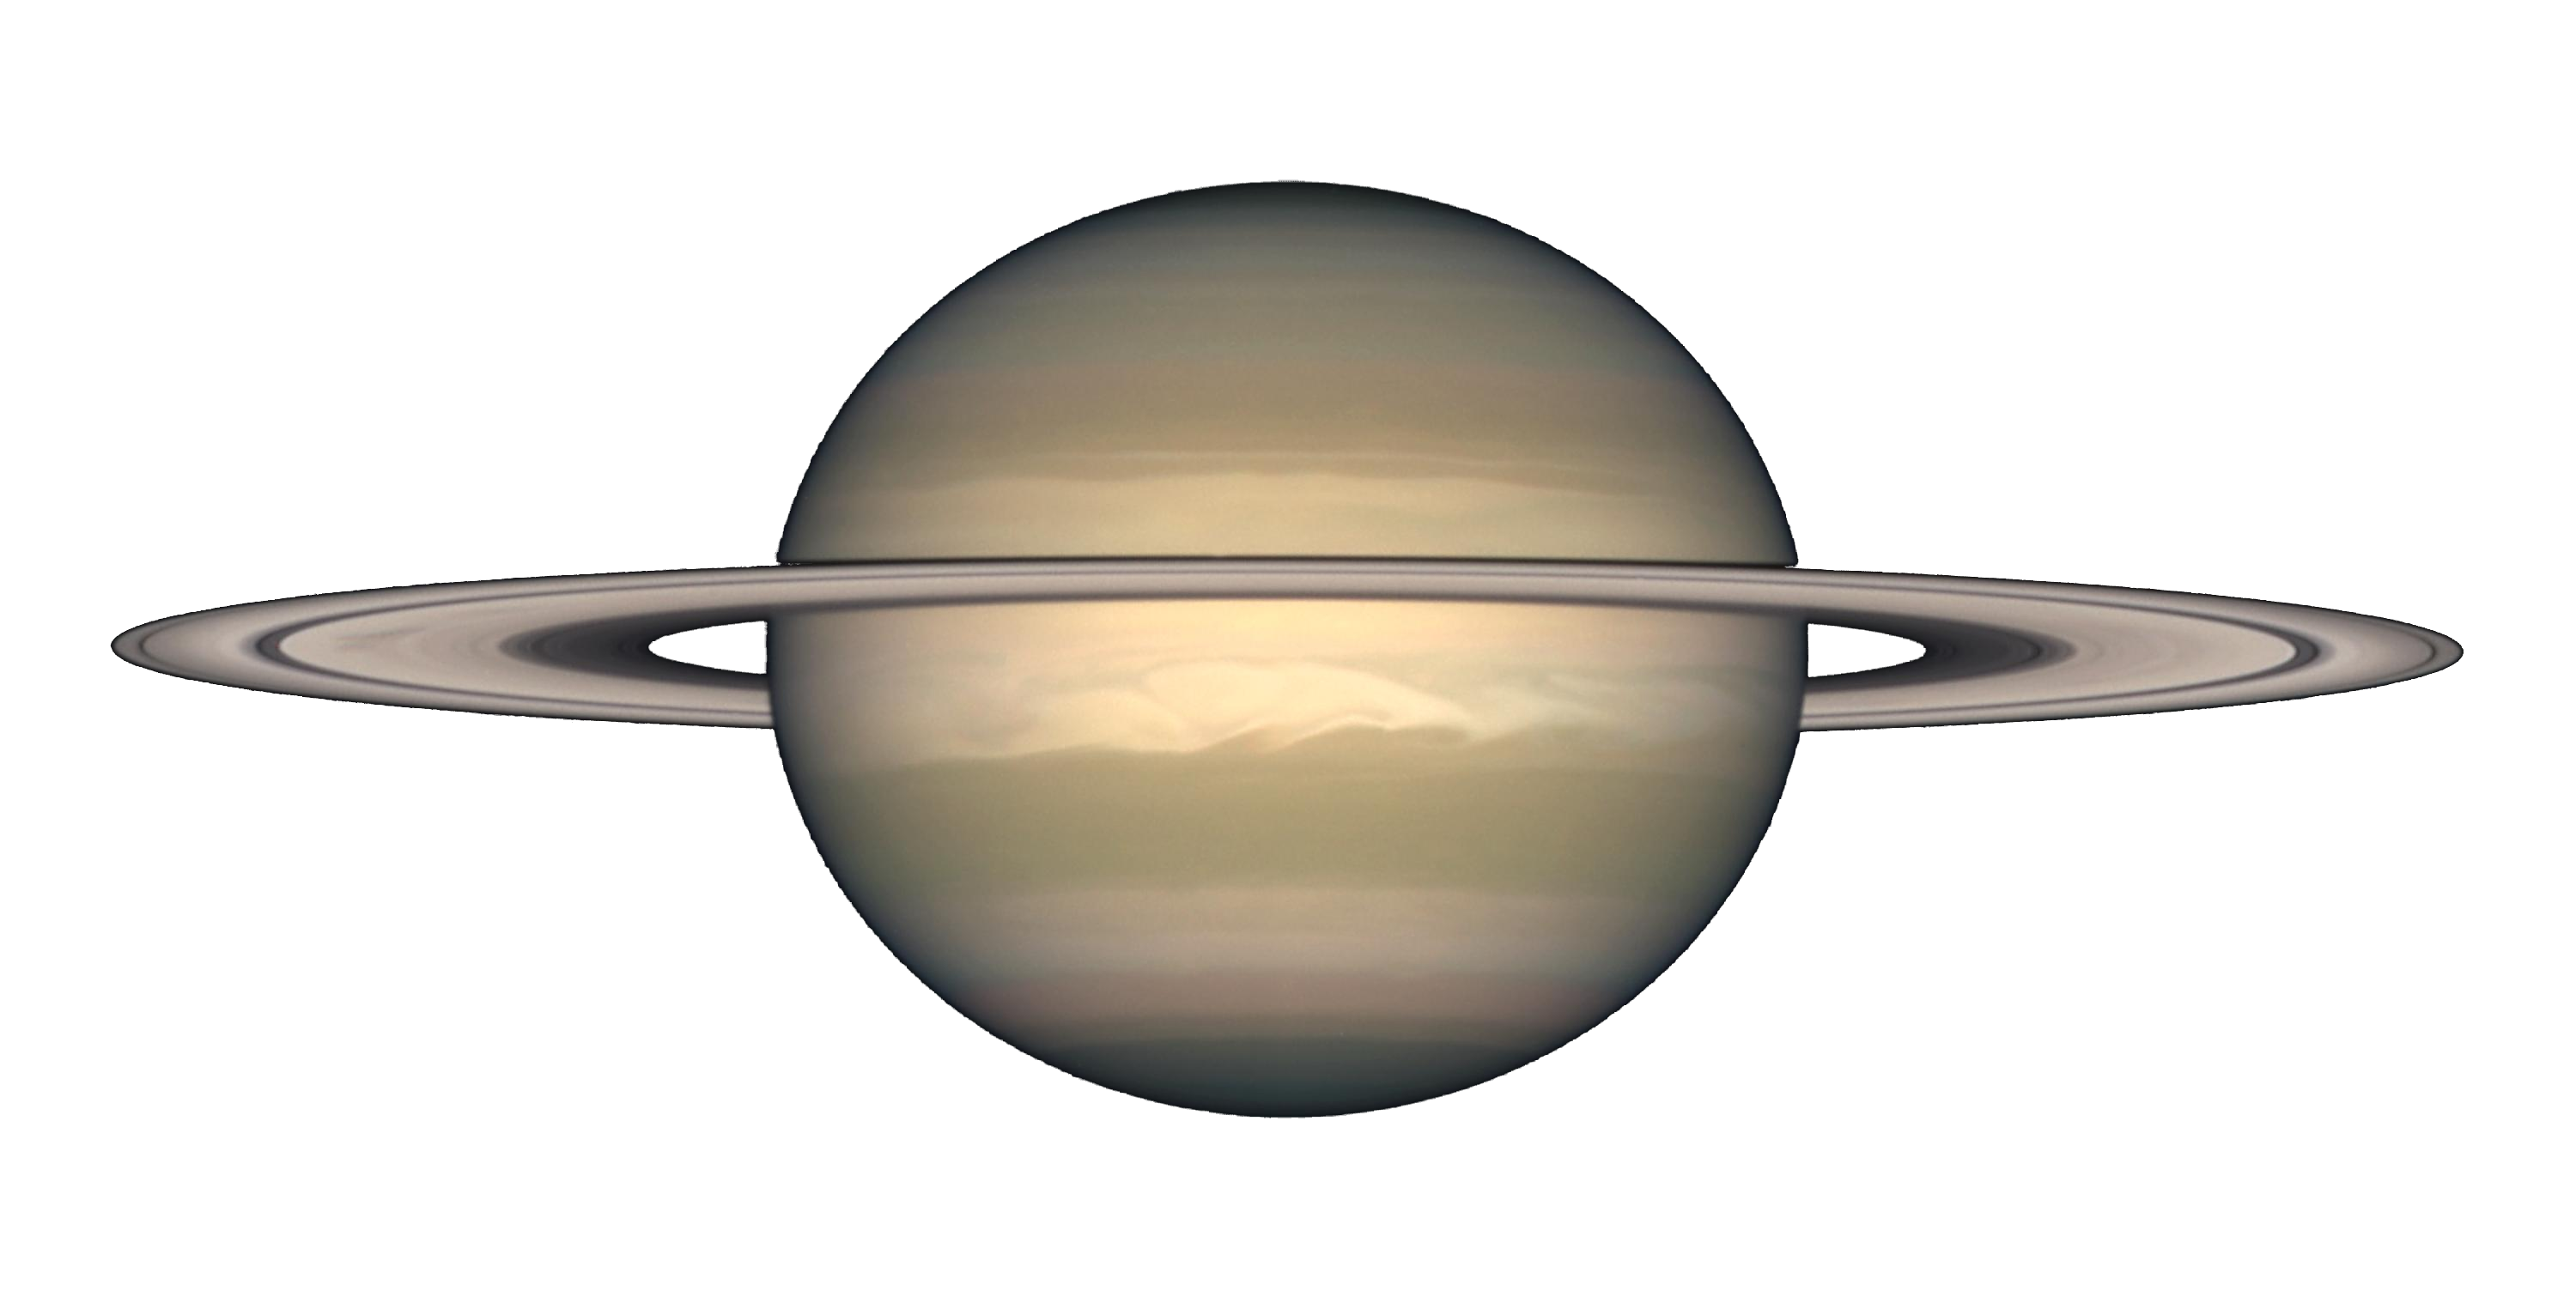 Pic di Saturno PNGture